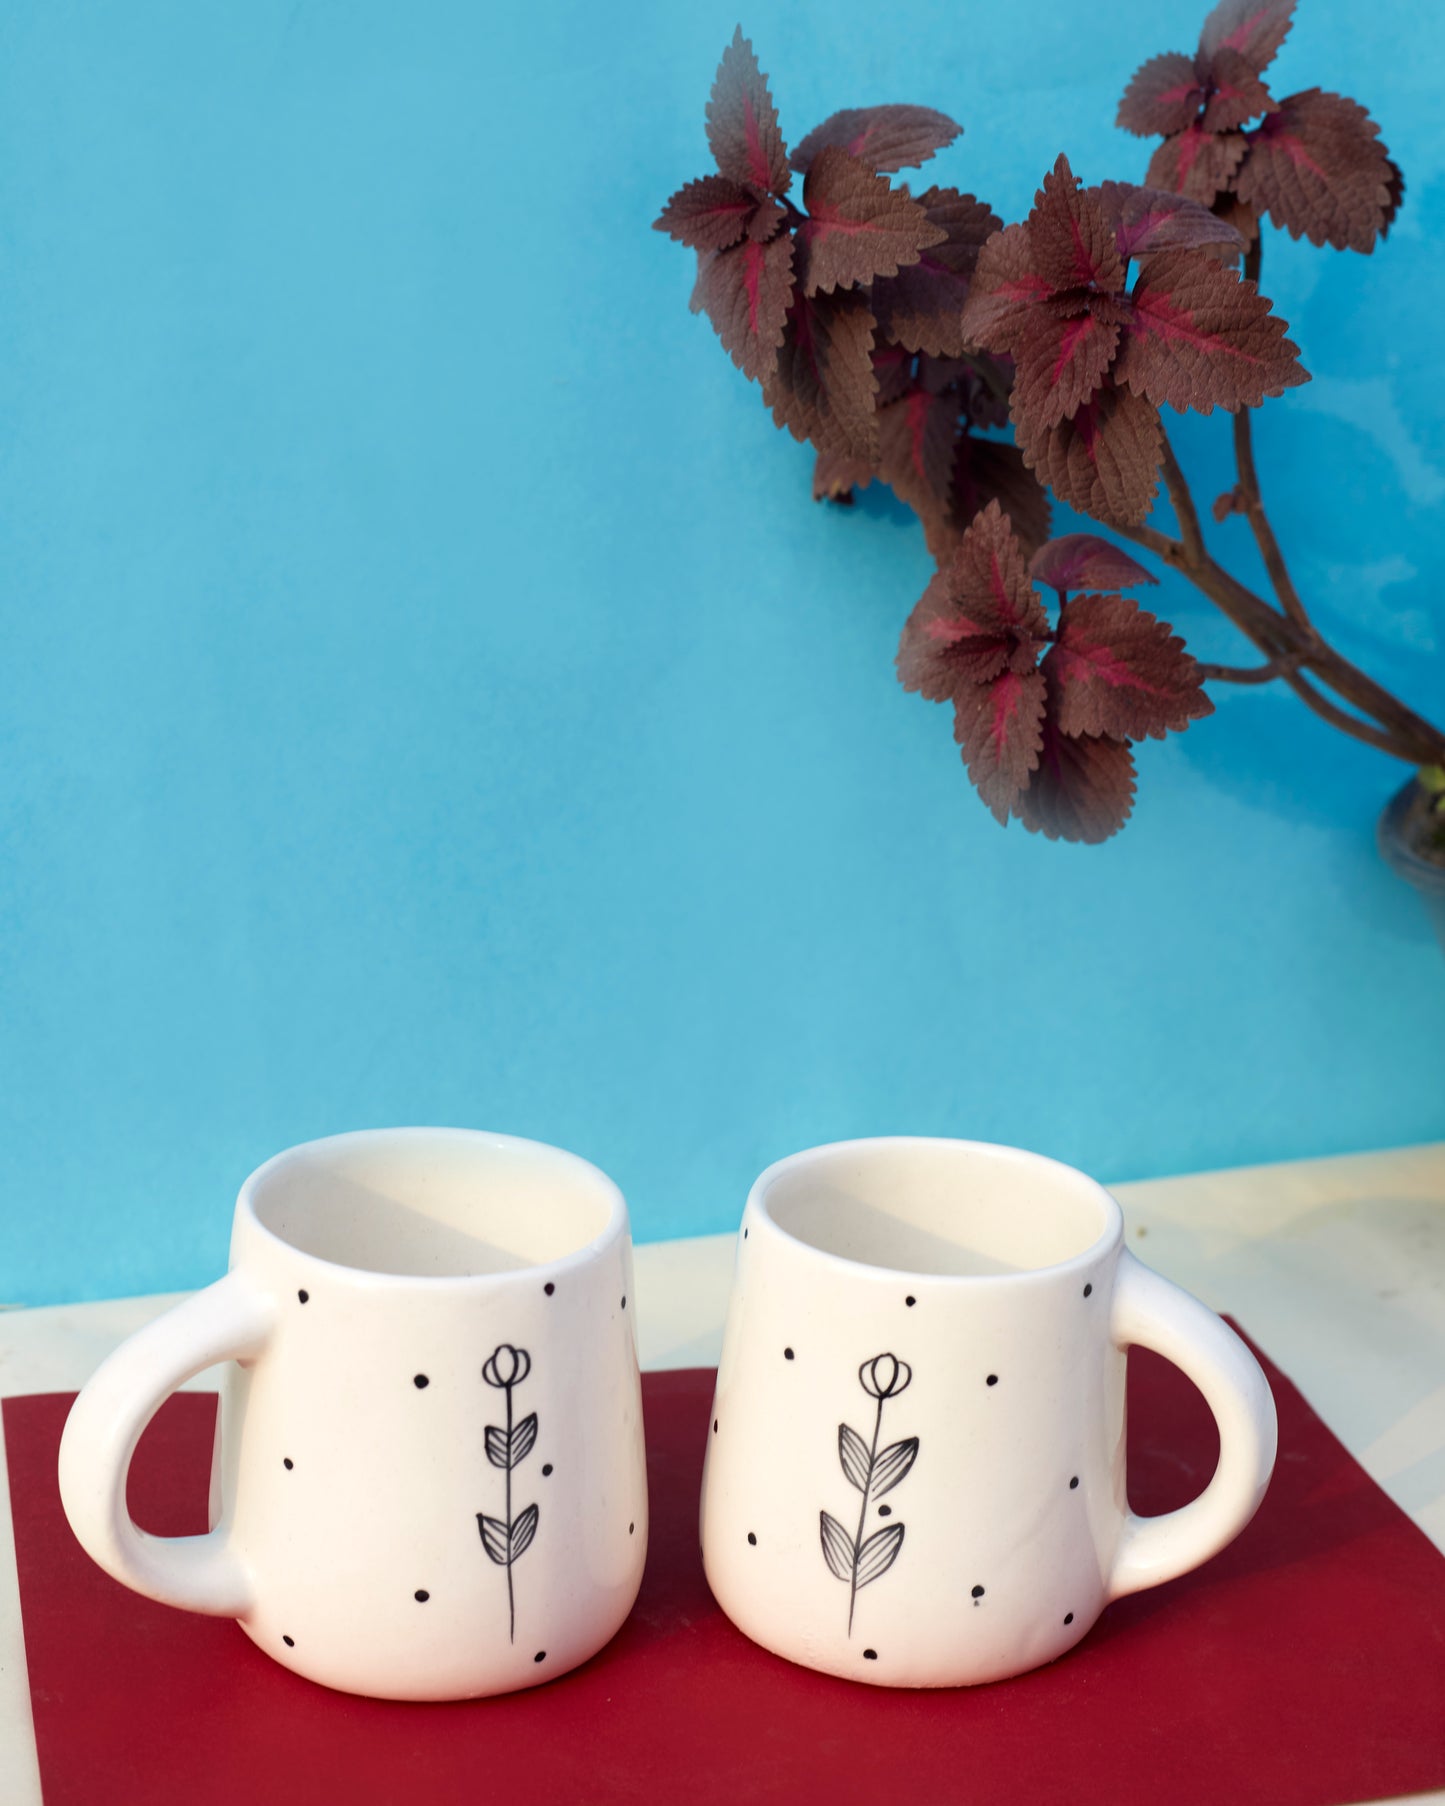 Sunny Sips: Set of 2 Ceramic Sunflowers Coffee Mug